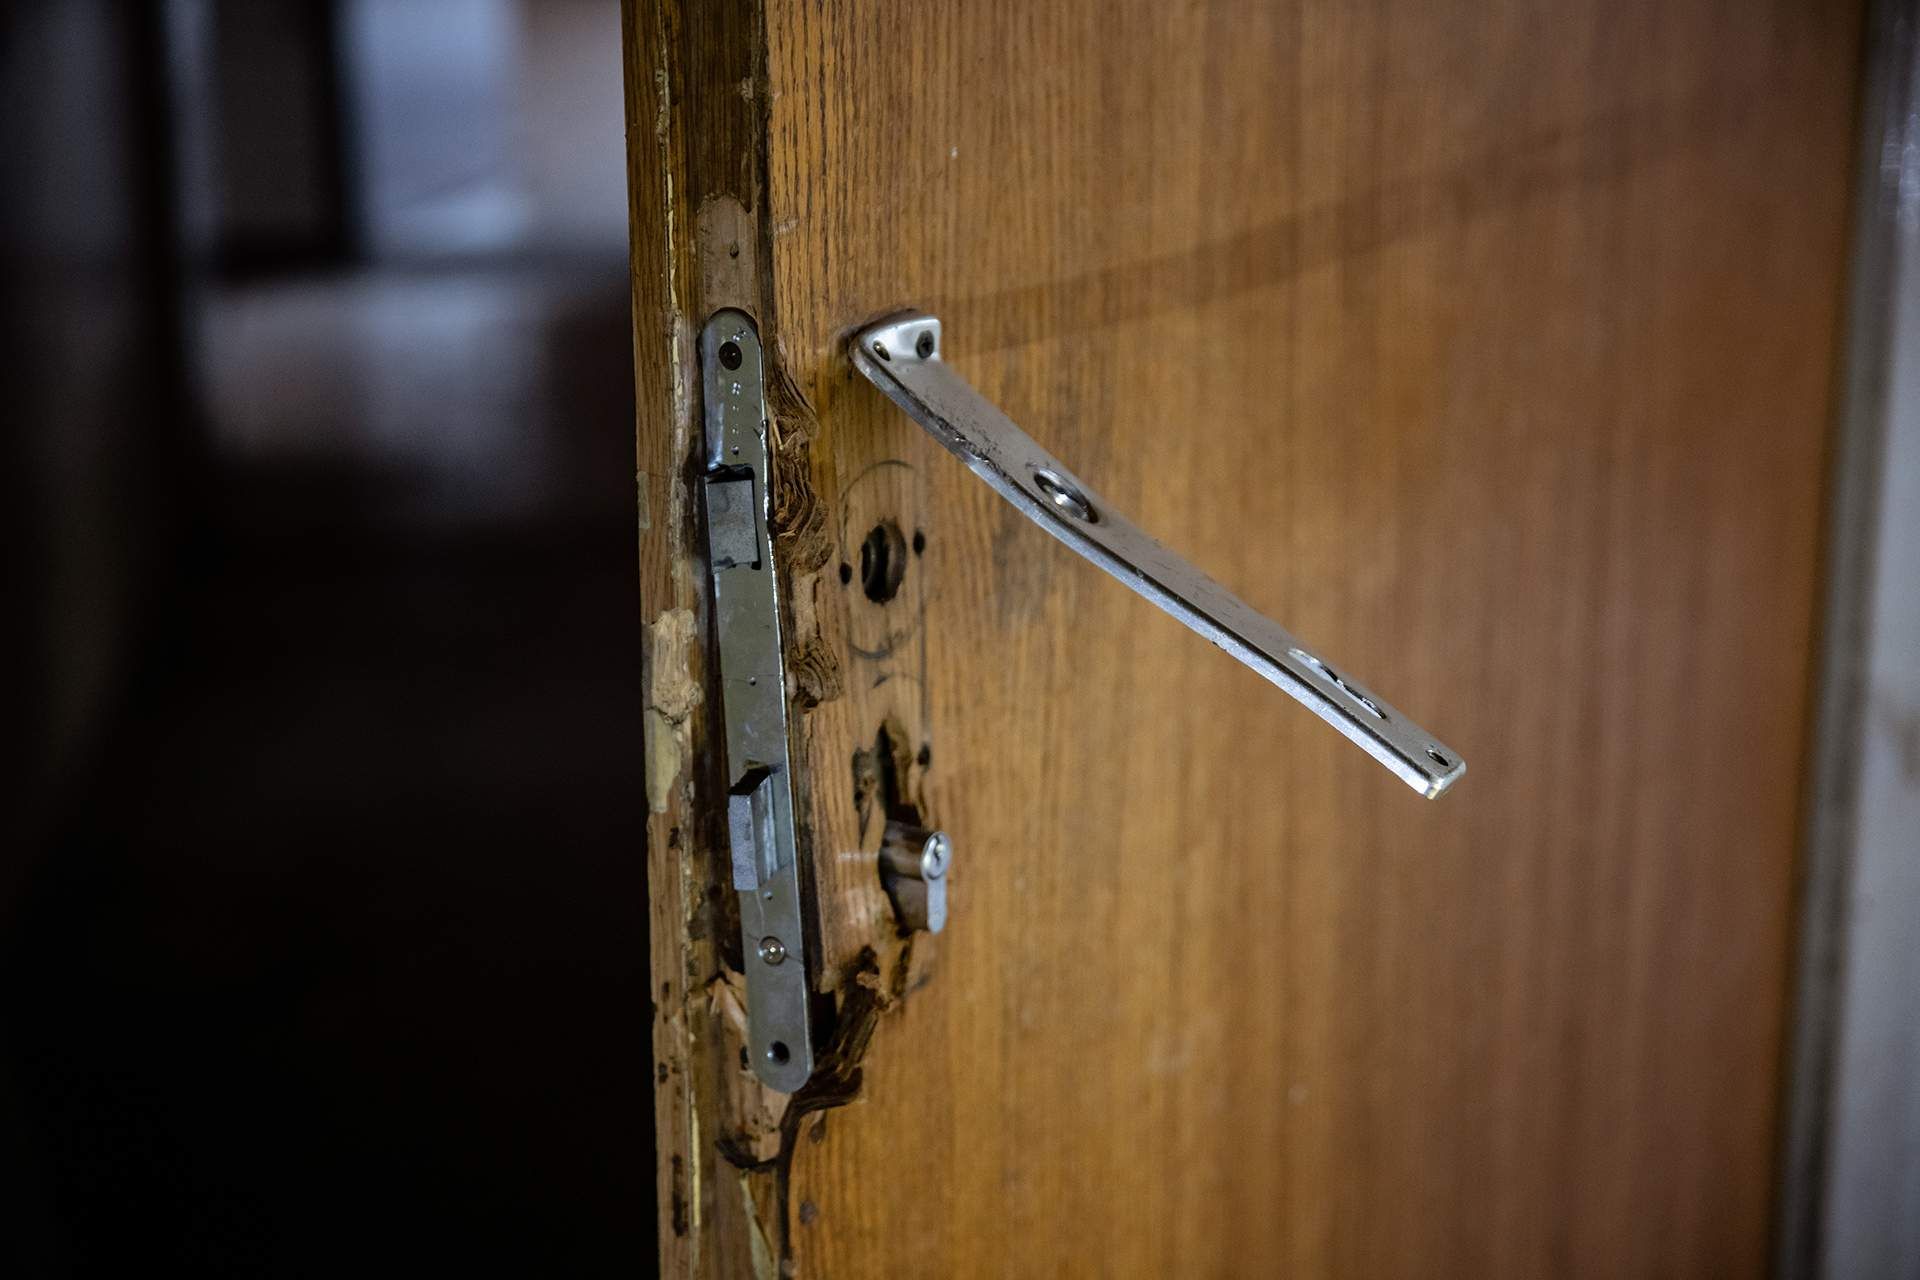 A close up of a door with a broken handle.